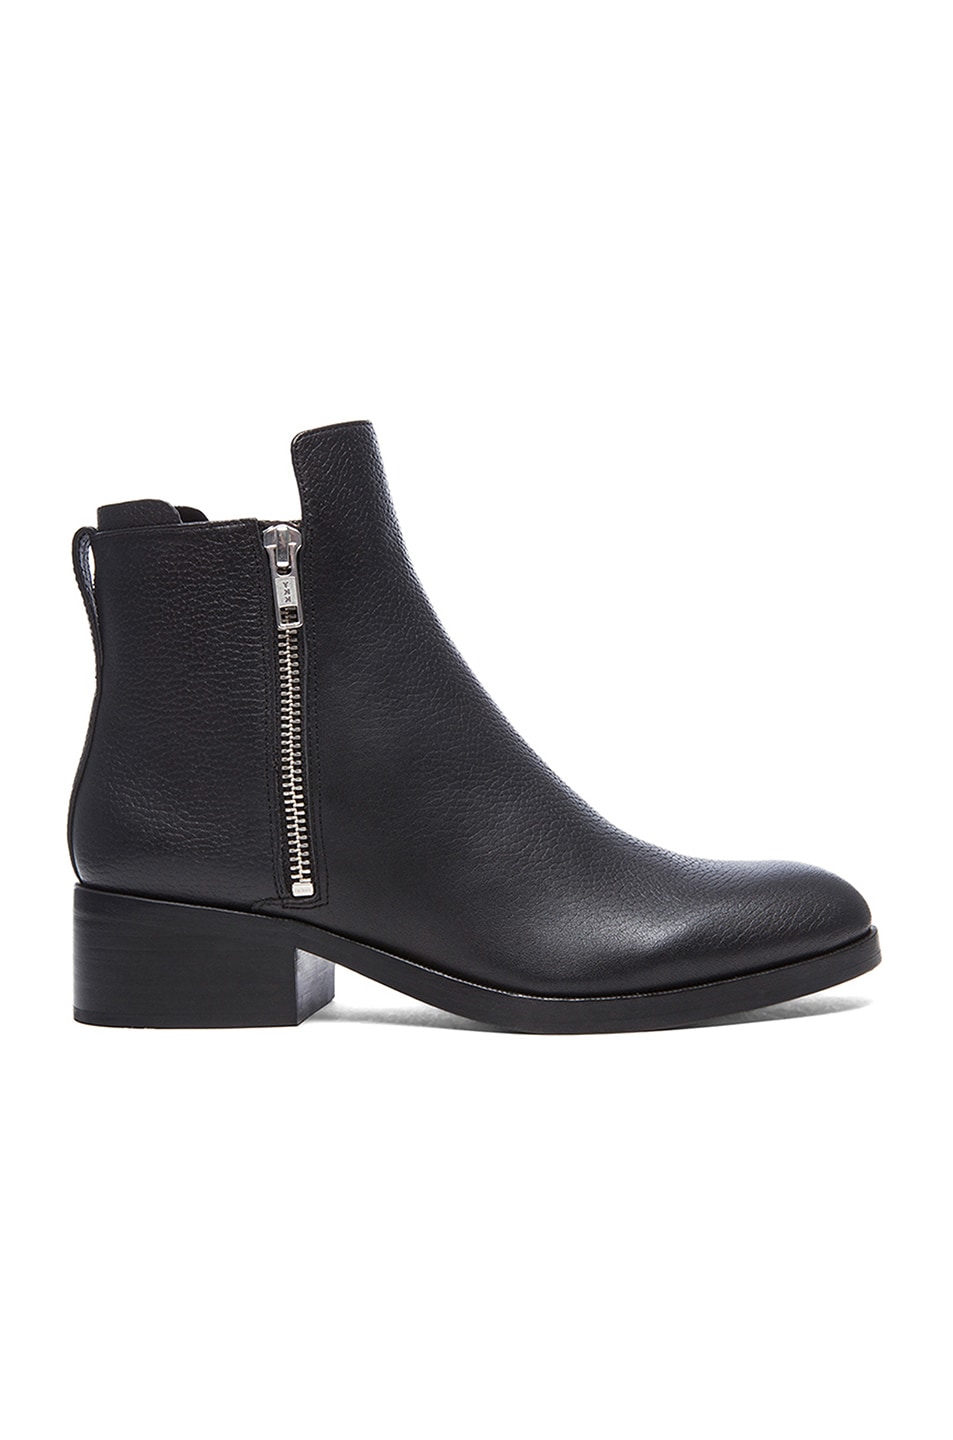 3.1 phillip lim Alexa Cow & Sheepskin Leather Boots in Black | FWRD